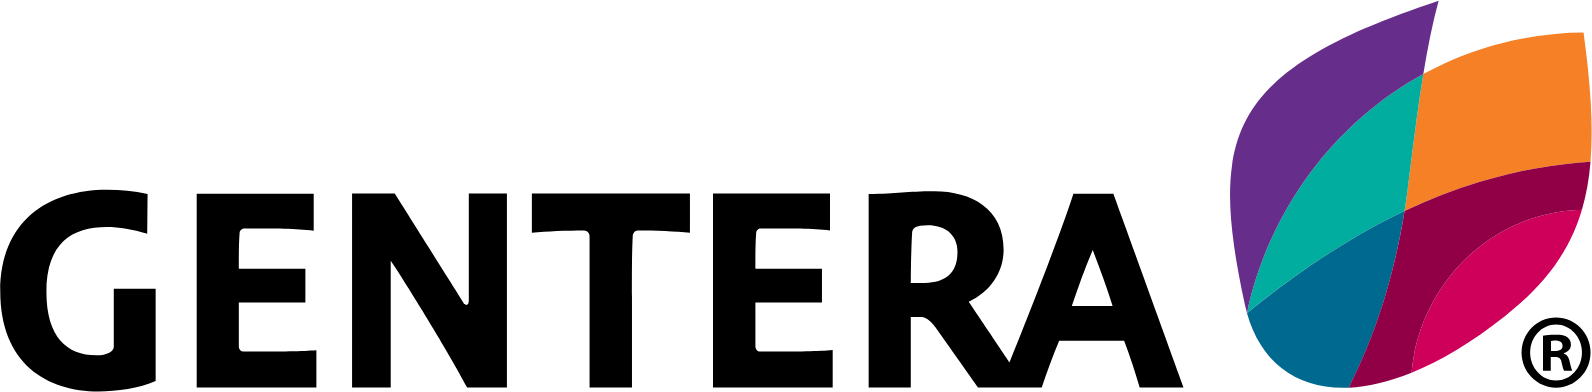 Gentera, S.A.B. de C.V. logo large (transparent PNG)